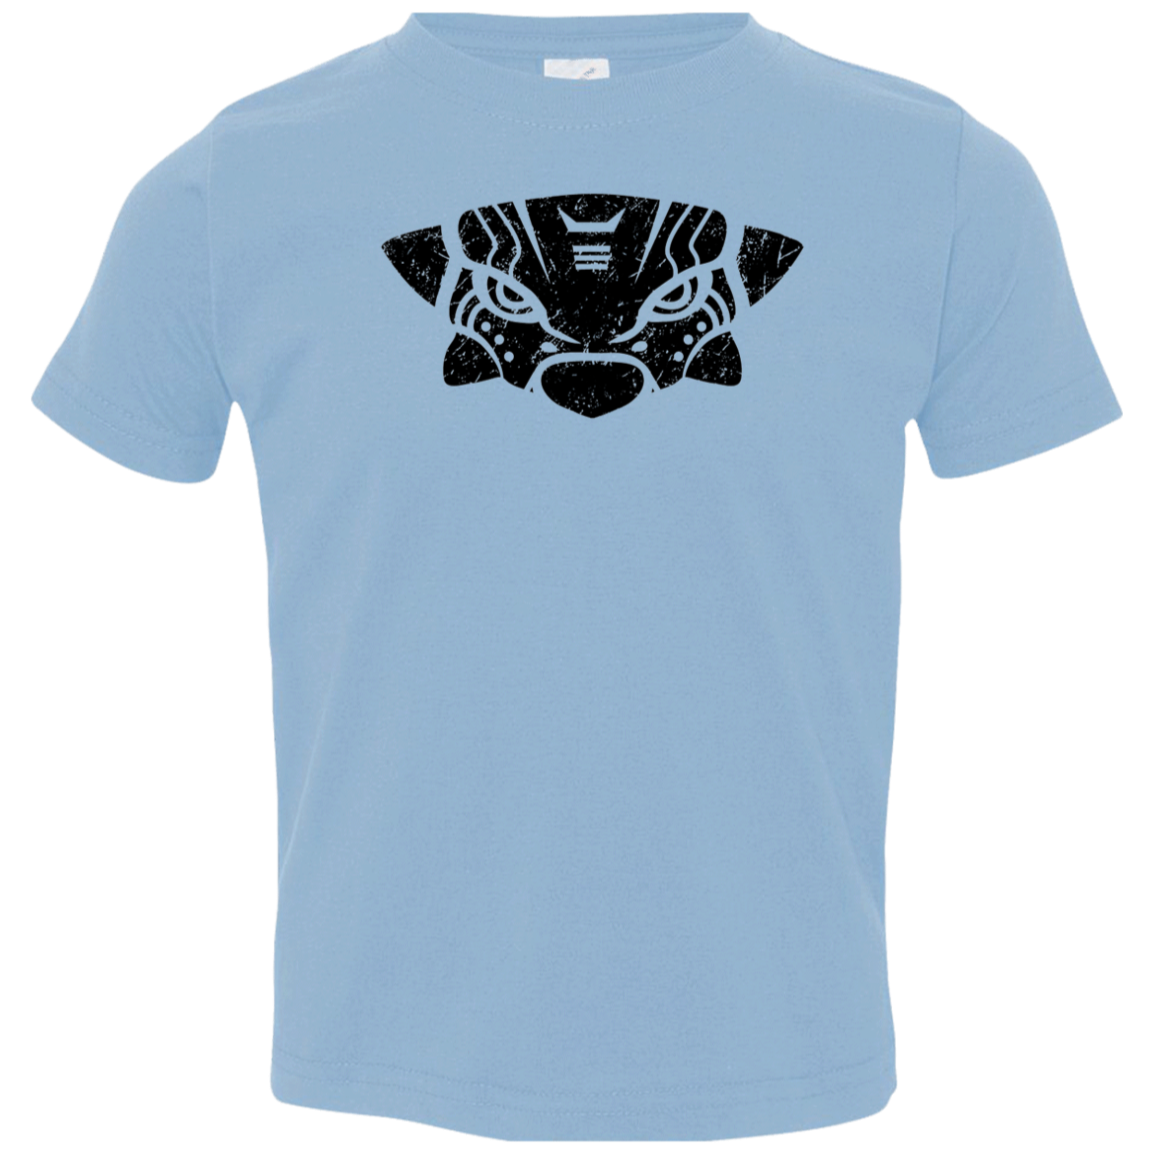 Black Distressed Emblem T-Shirt for Toddlers (Ankylosaurus/Grump)